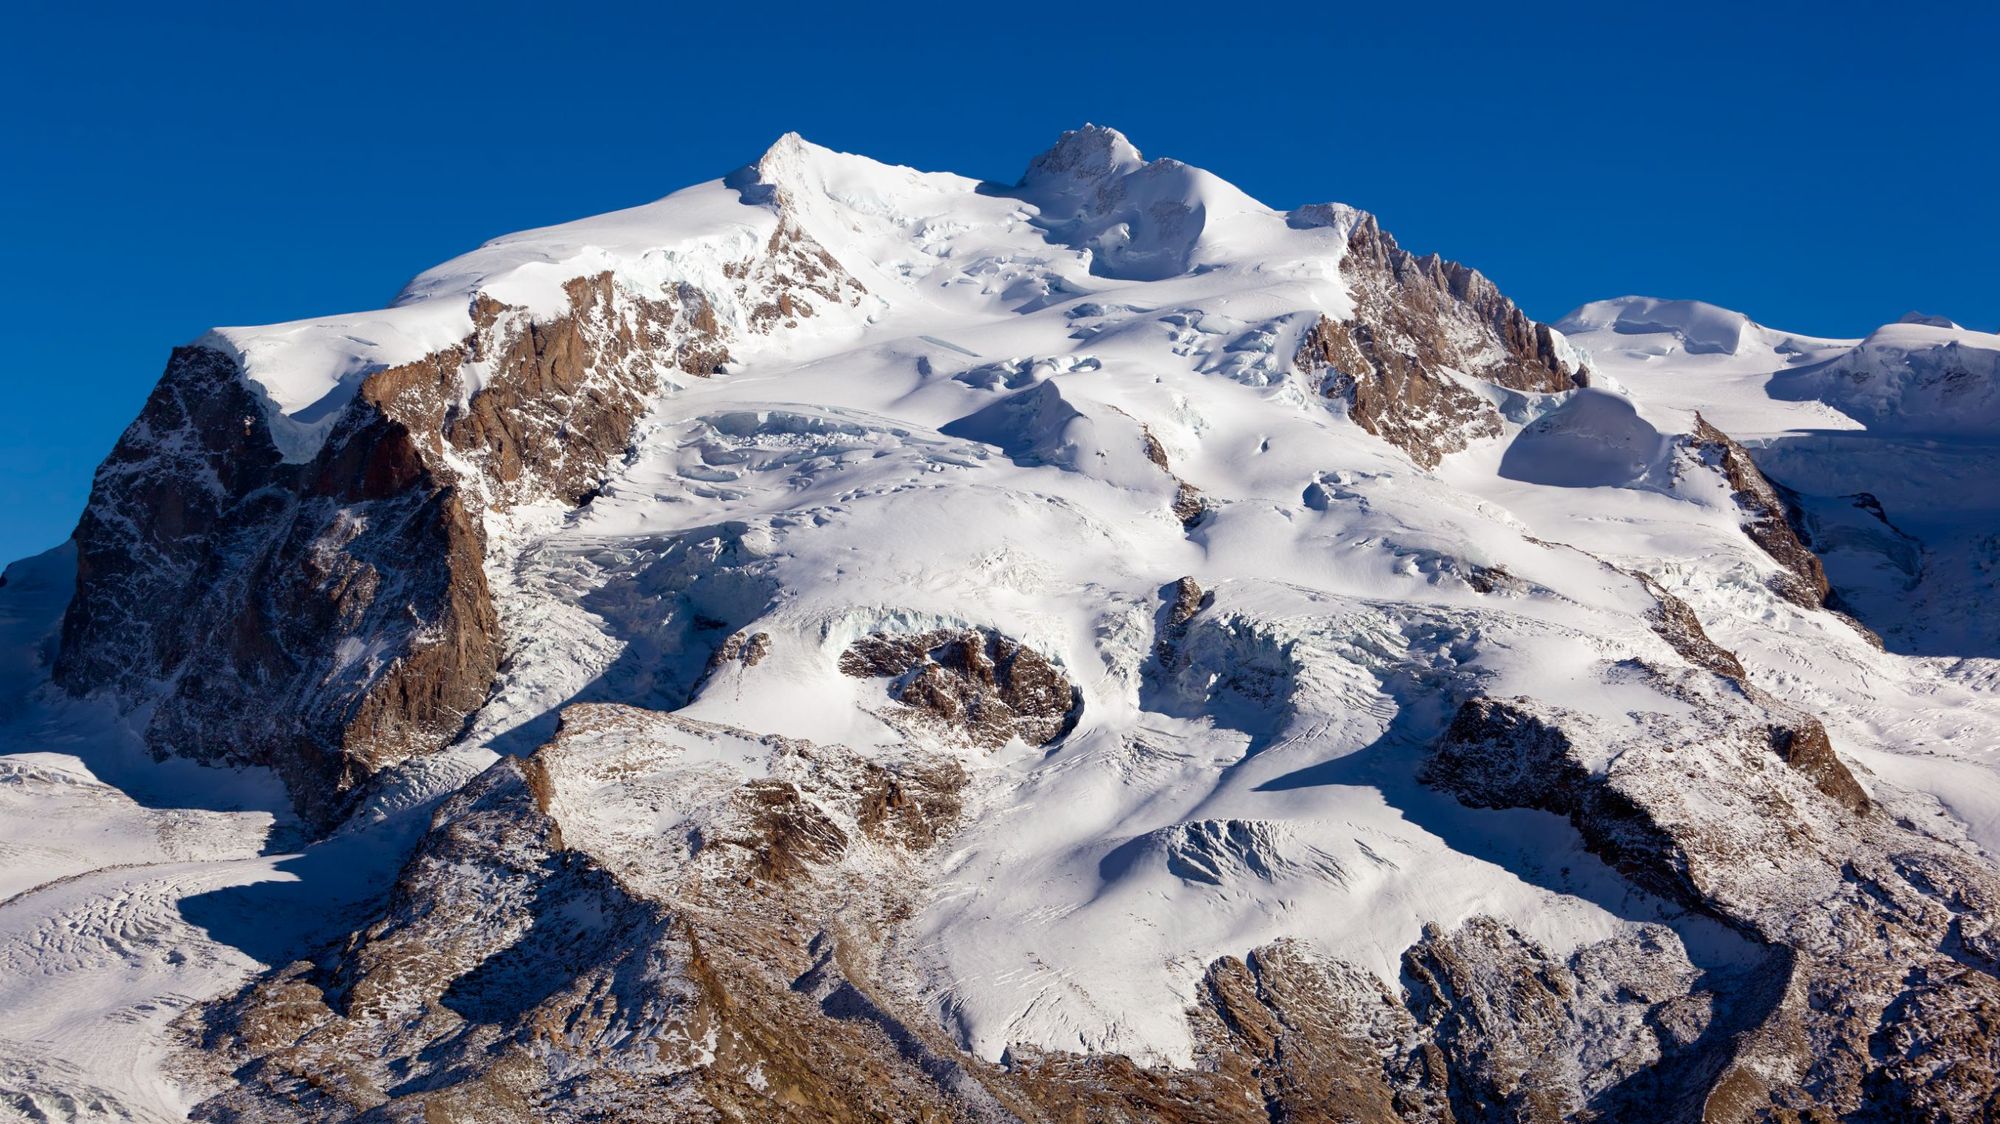 The Monte Rosa mountain massif, as seen in Vallis, Switzerland. Photo: Getty